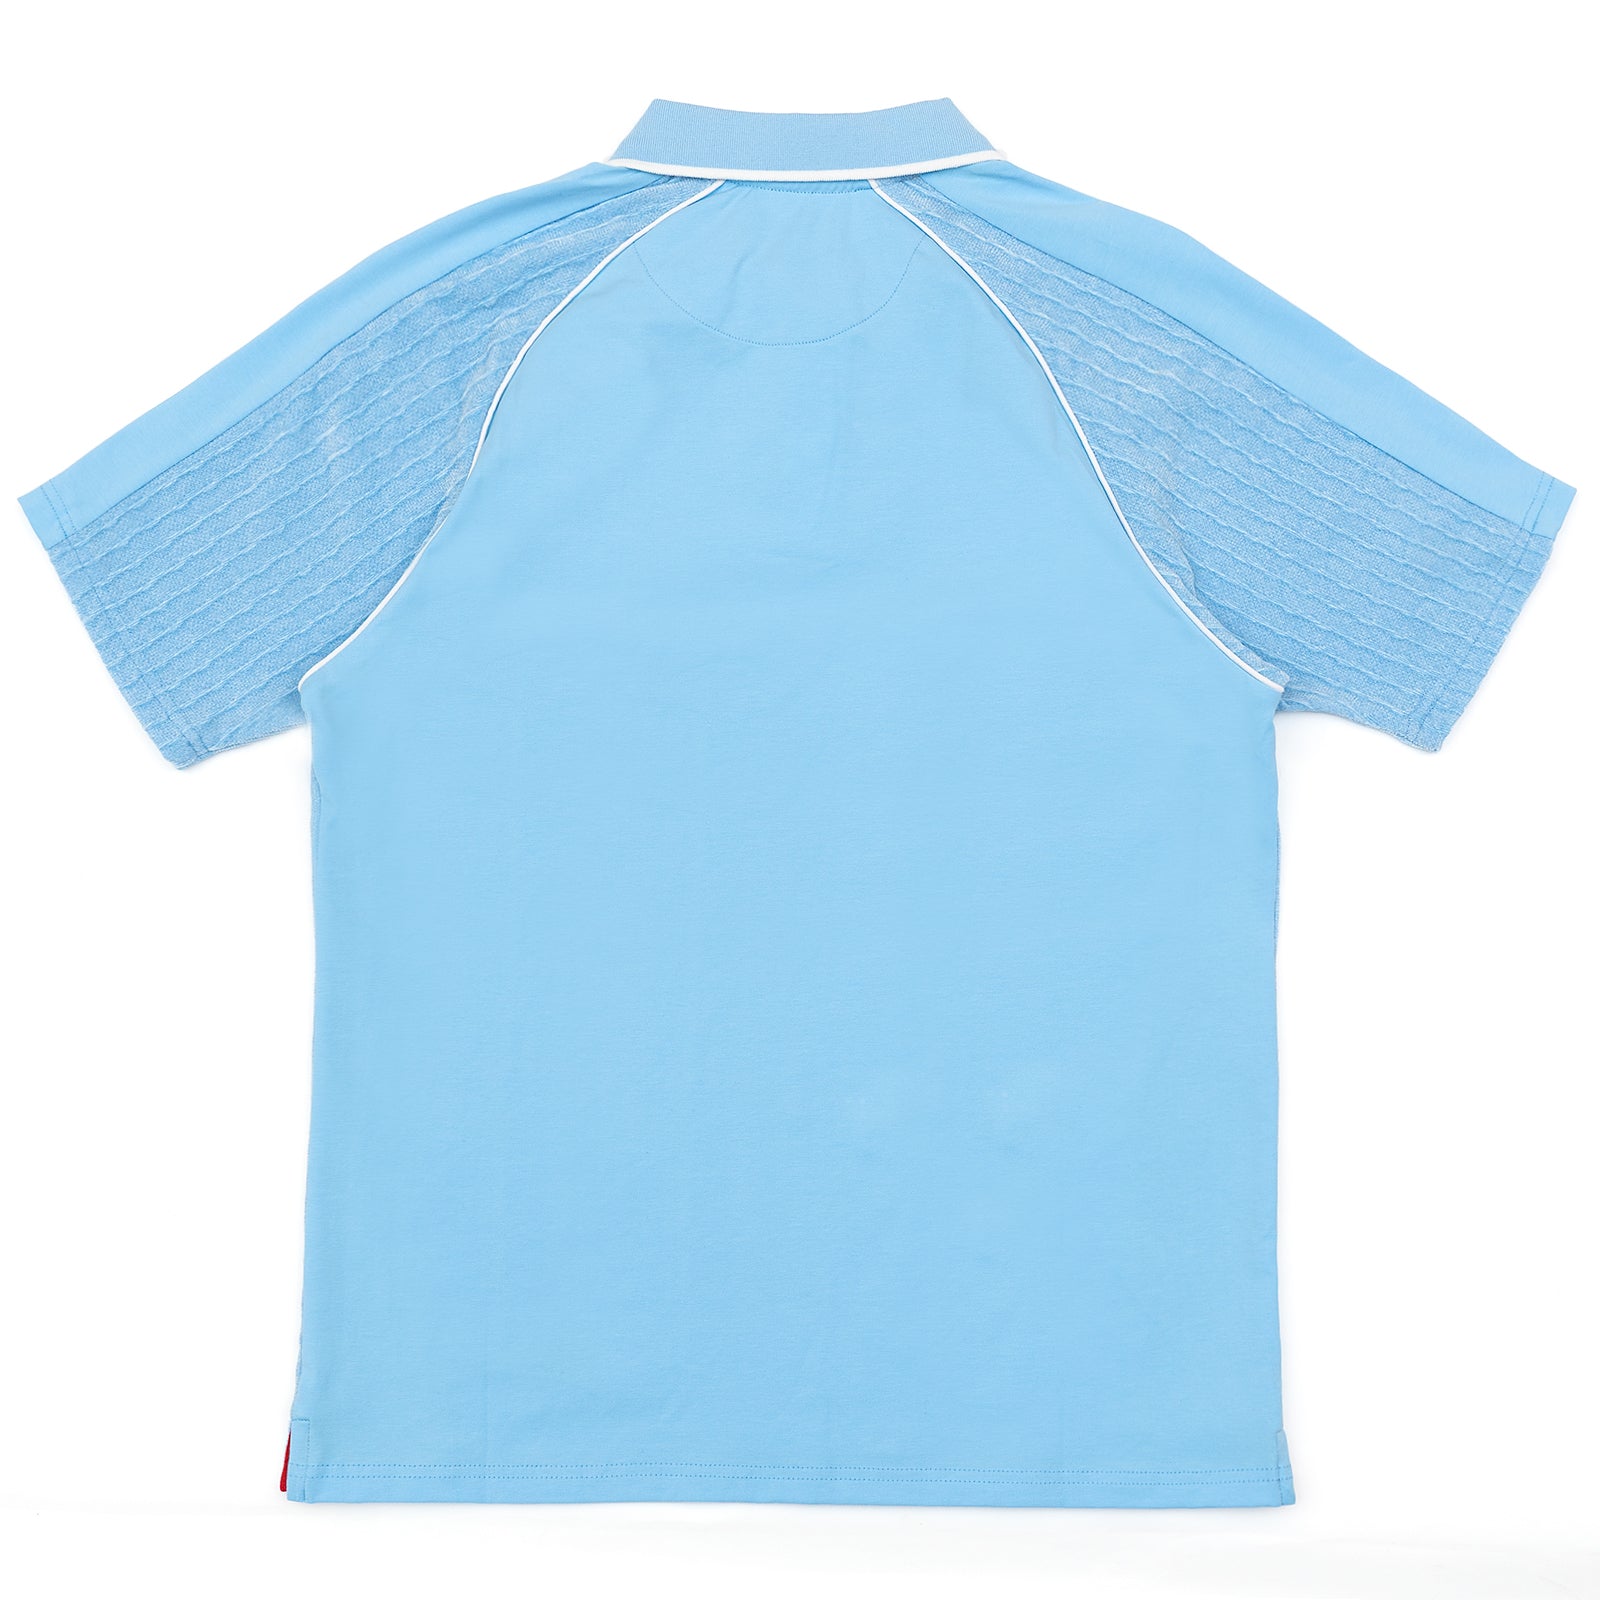 M394 Makobi Daniali Polo Shirt- Blue